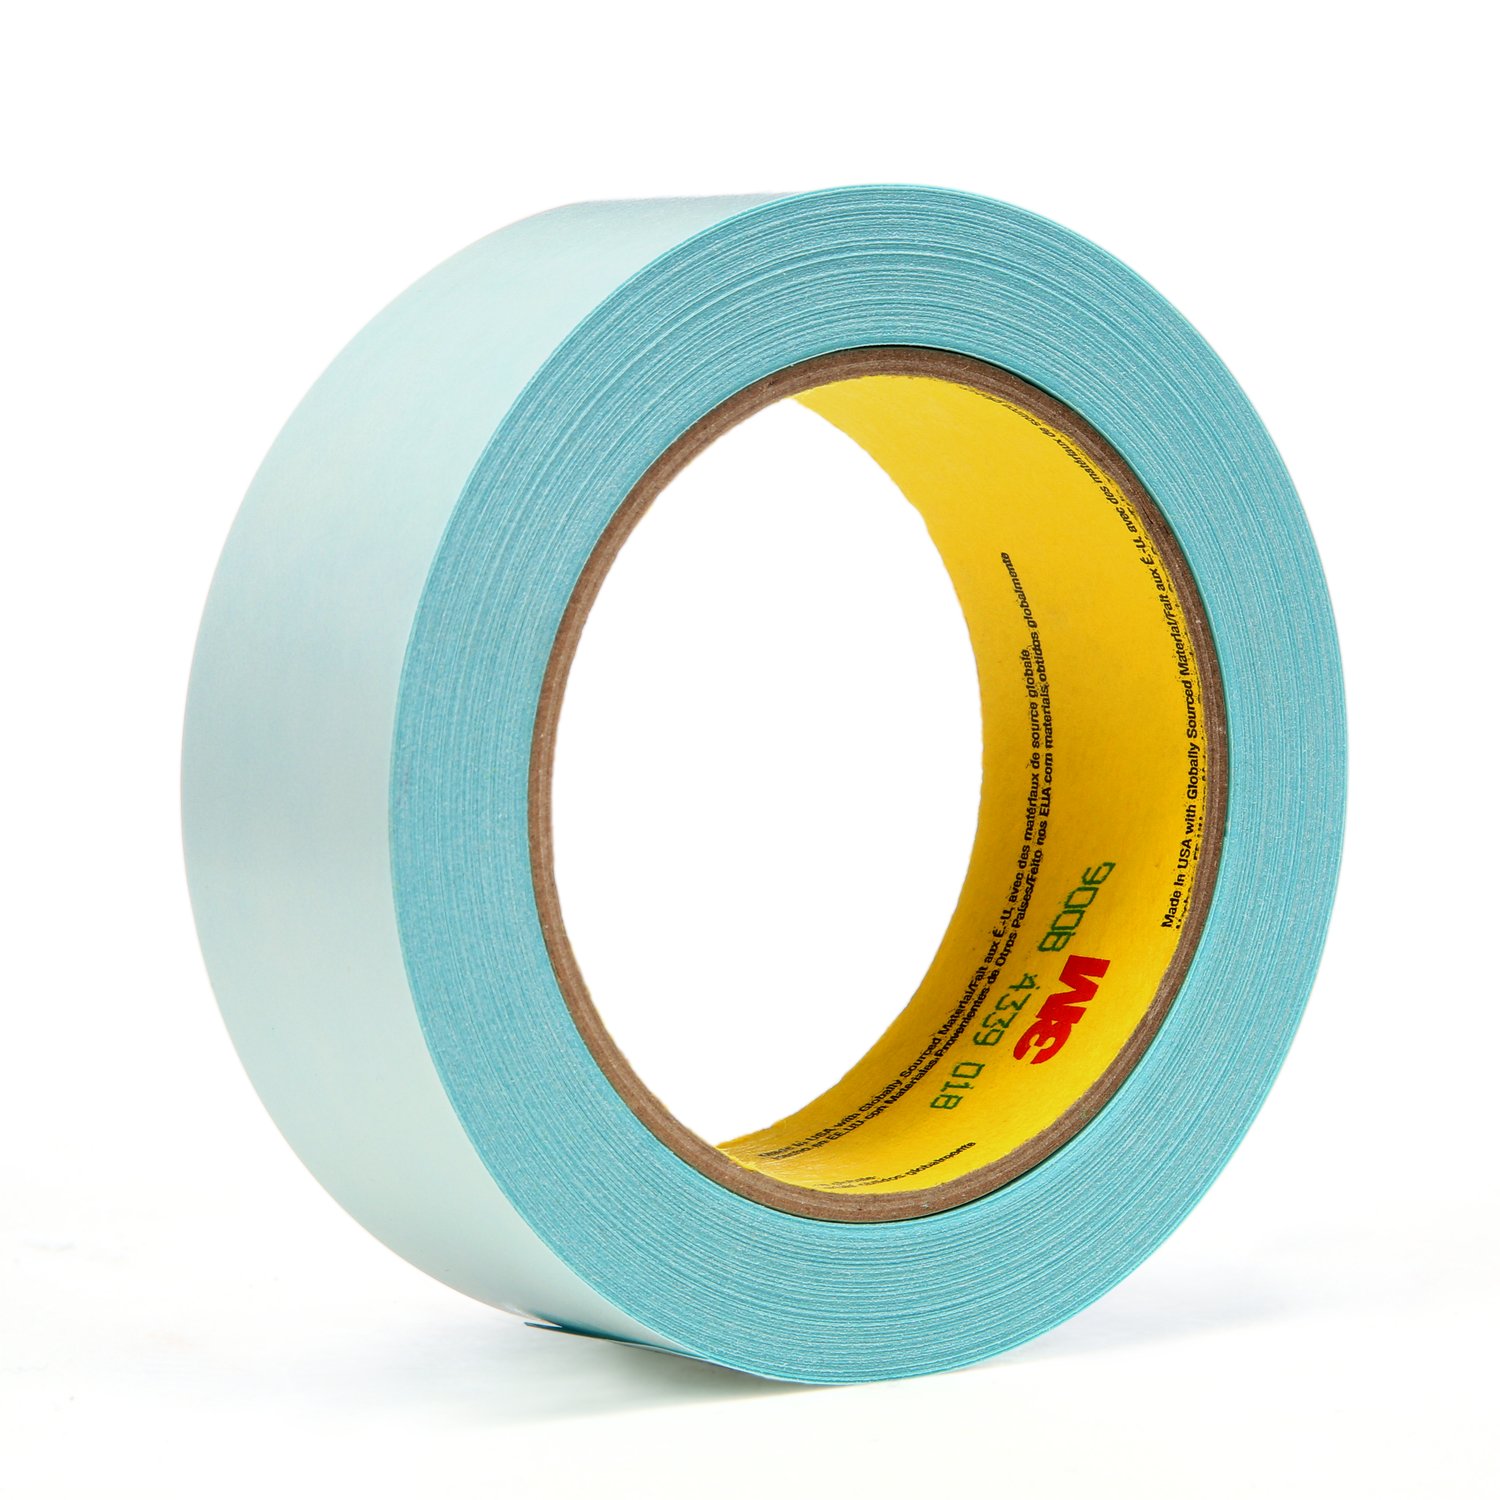 7100028255 - 3M Repulpable Double Coated Splicing Tape 900B, Blue, 36 mm x 33 m, 2.5
mil, 24 rolls per case